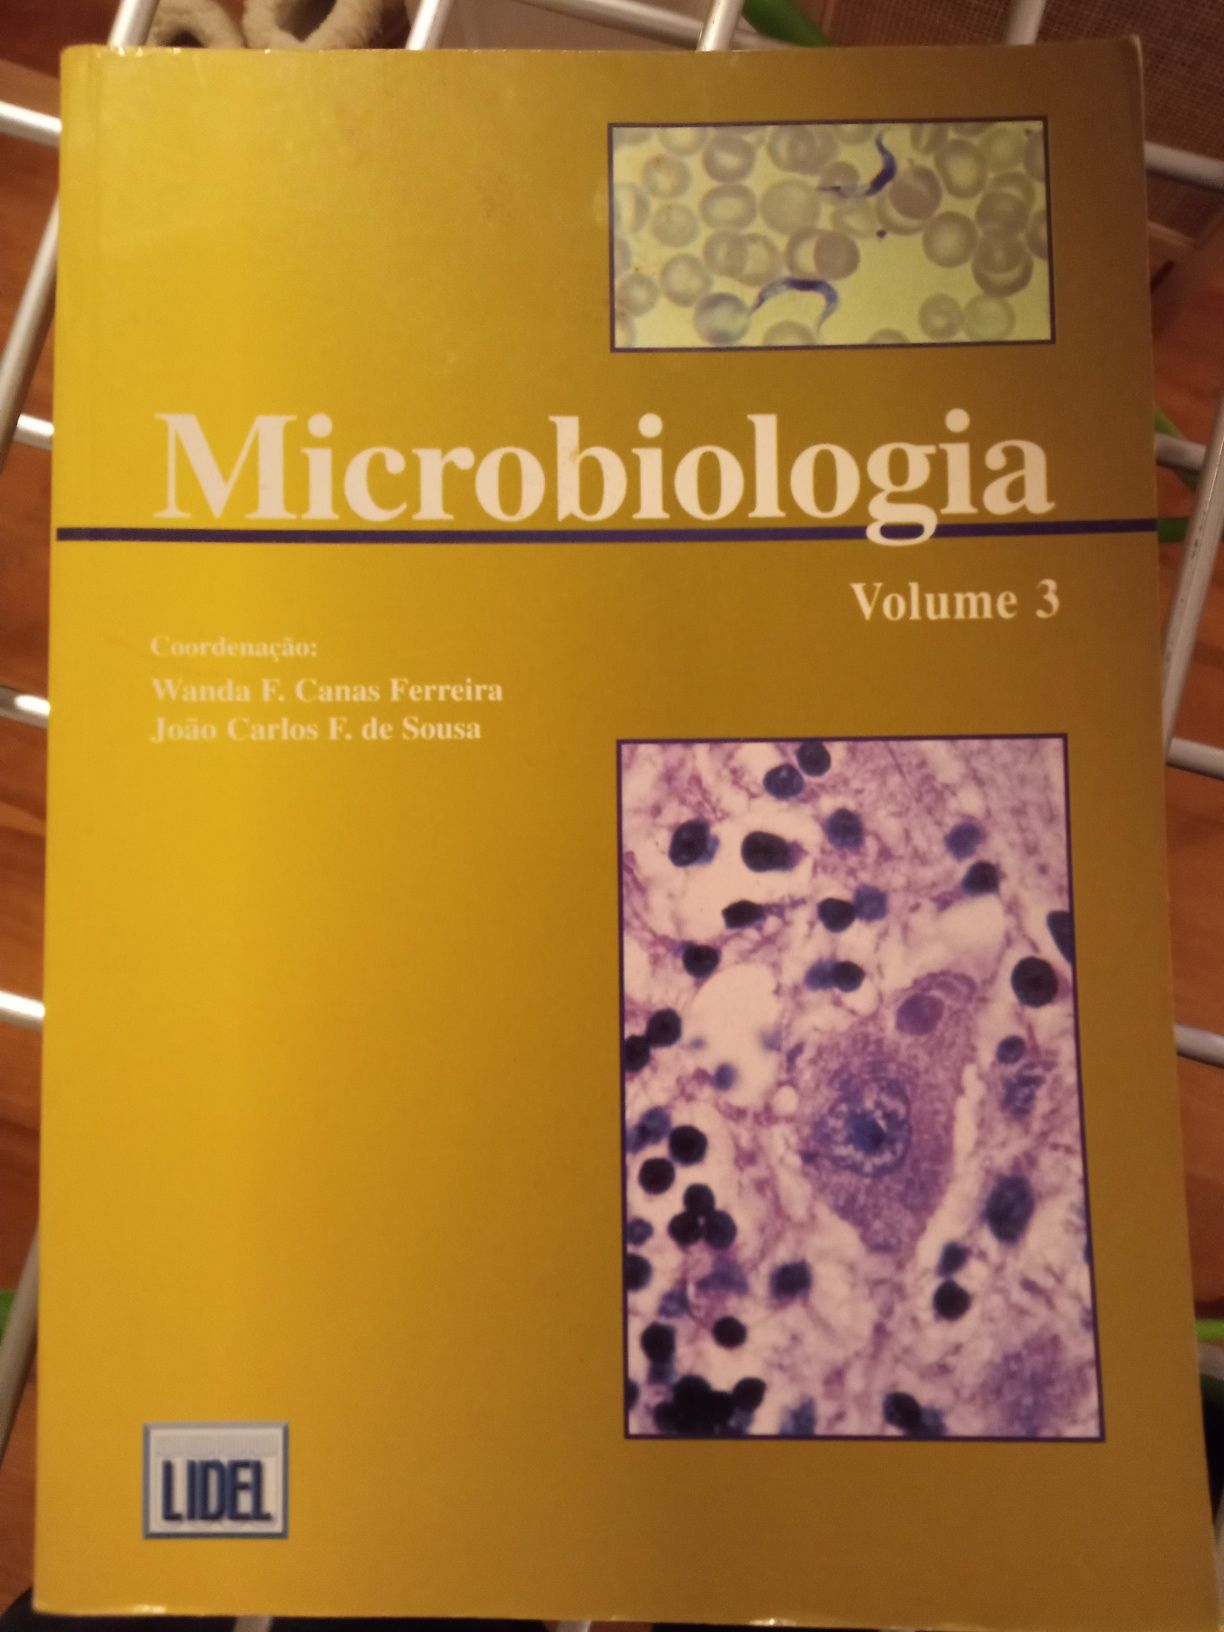 Microbiologia volume 3